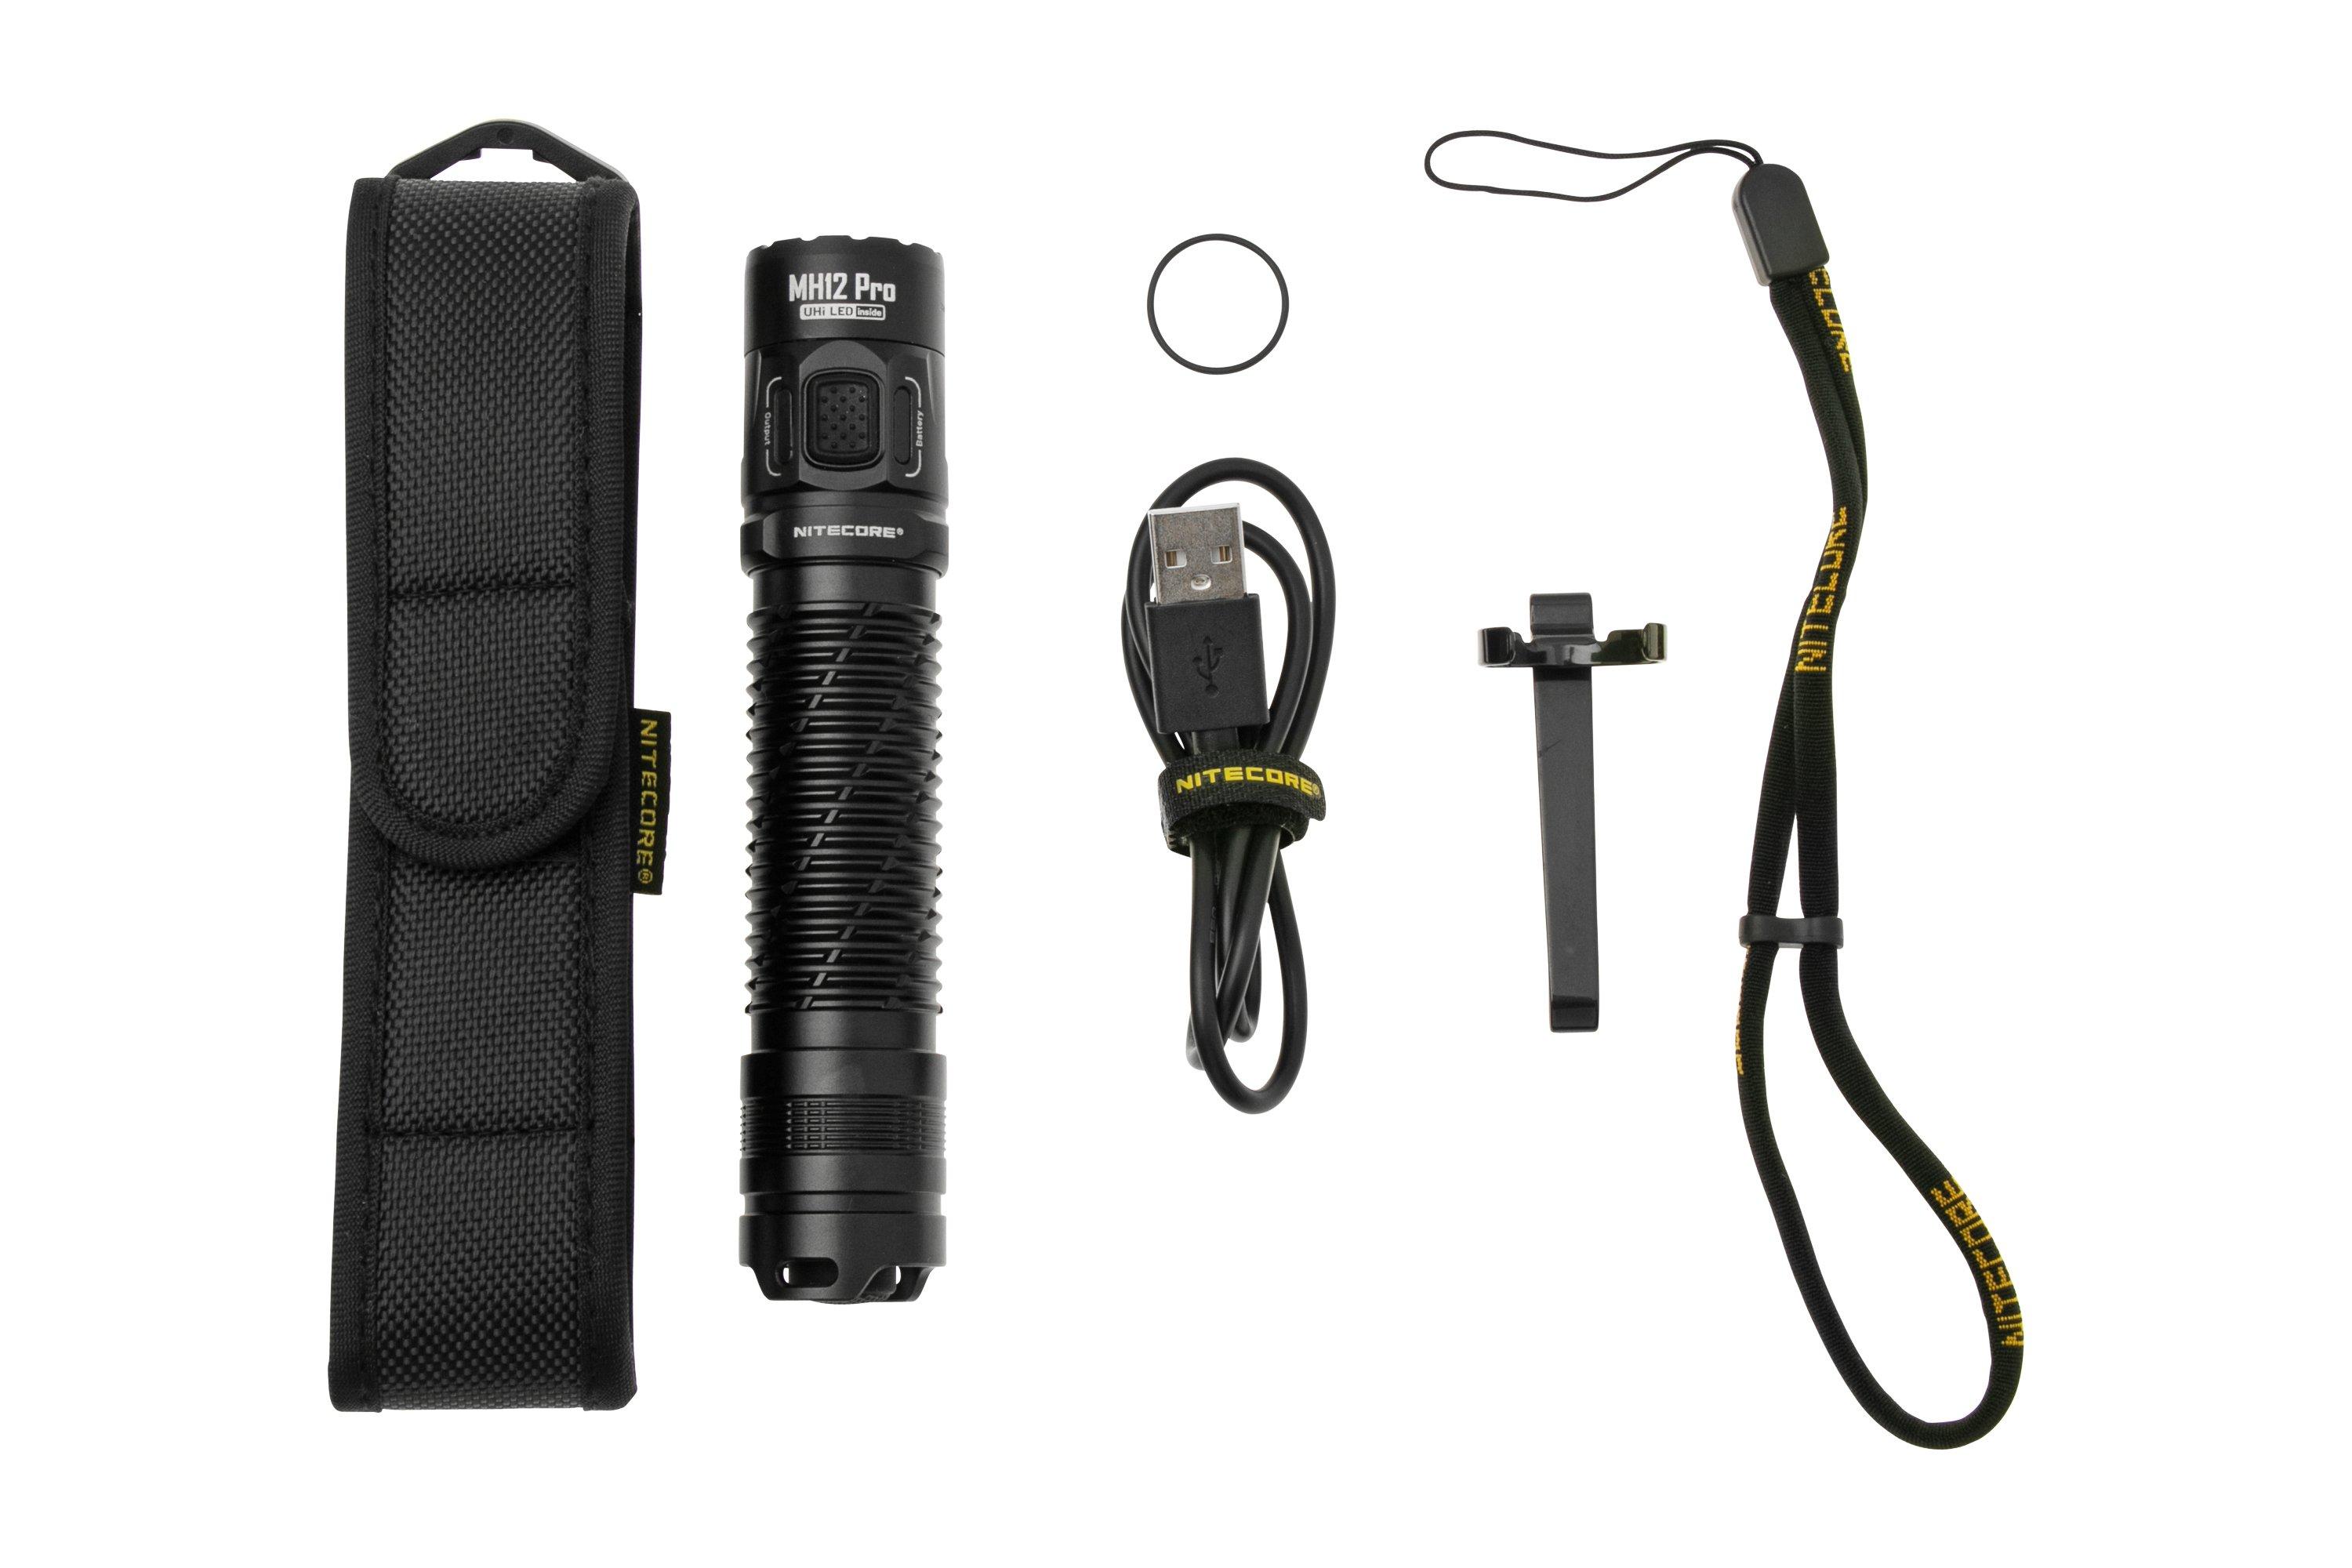 NiteCore MH12 Pro rechargeable flashlight, 3300 lumens | Advantageously .